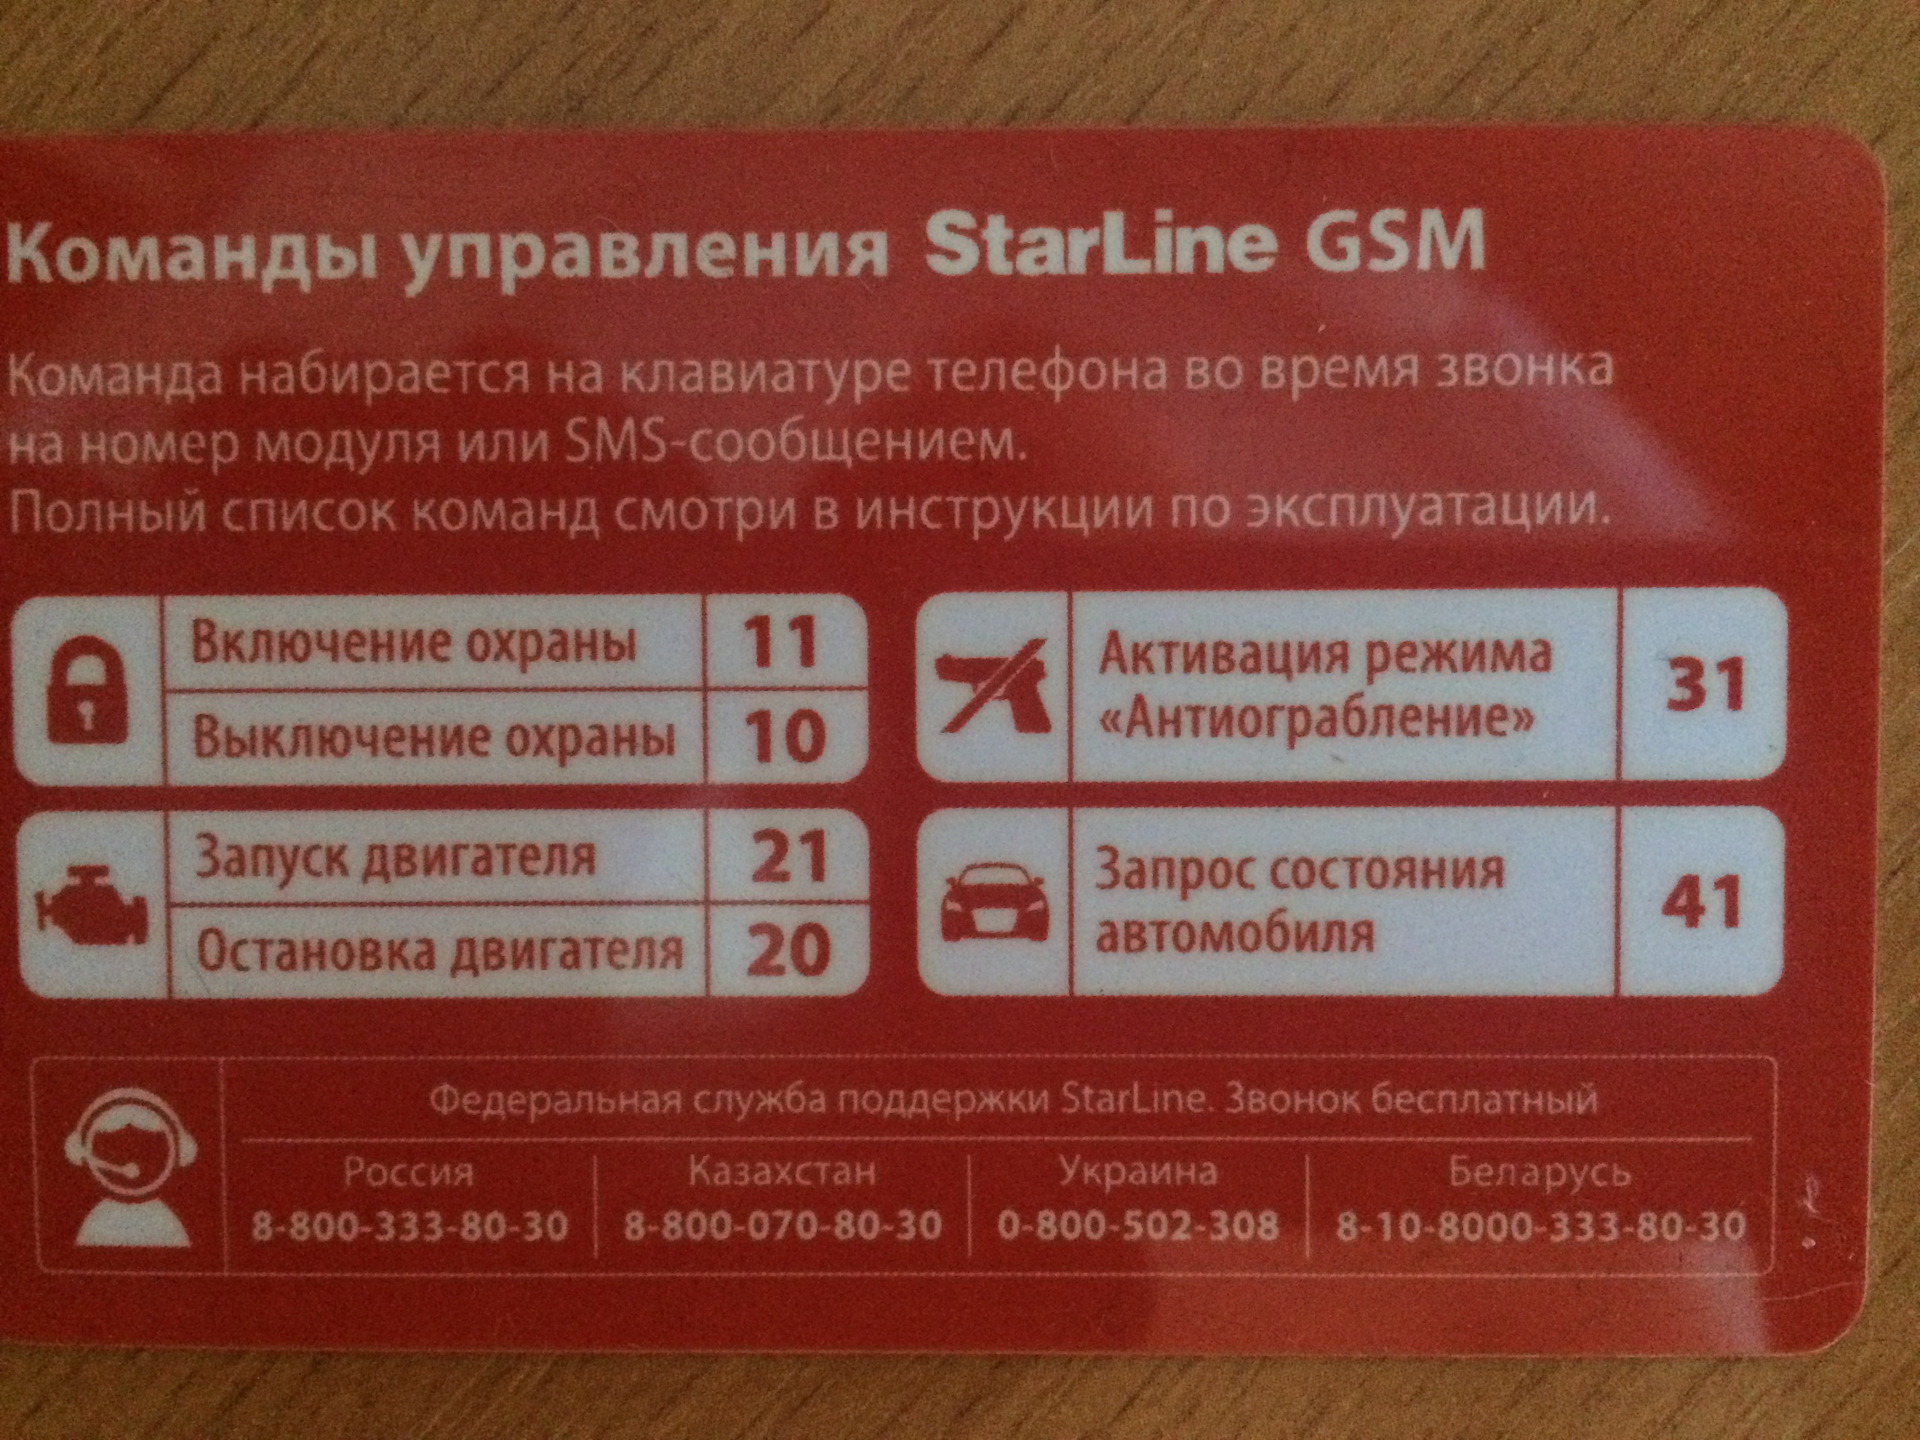 Команда запуск двигателя старлайн. Команды управления STARLINE GSM. Коды команд старлайн GSM а93. Коды сигнализации STARLINE GSM. SMS команды STARLINE s96.